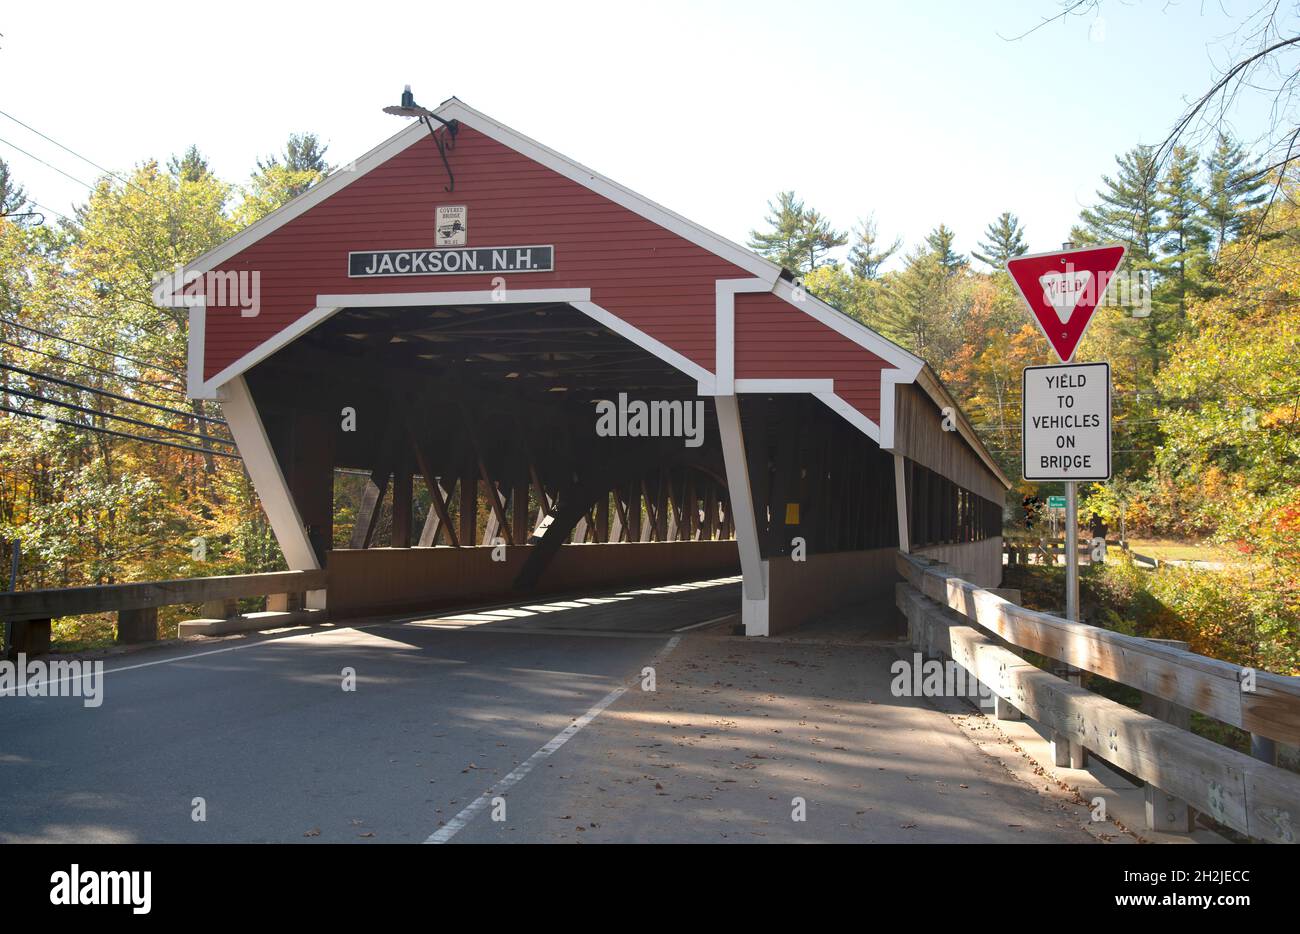 The Honeymoon Covered Bridge in Jackson, NH. USA.  Built in 1876. It crosses the Ellis River Stock Photo